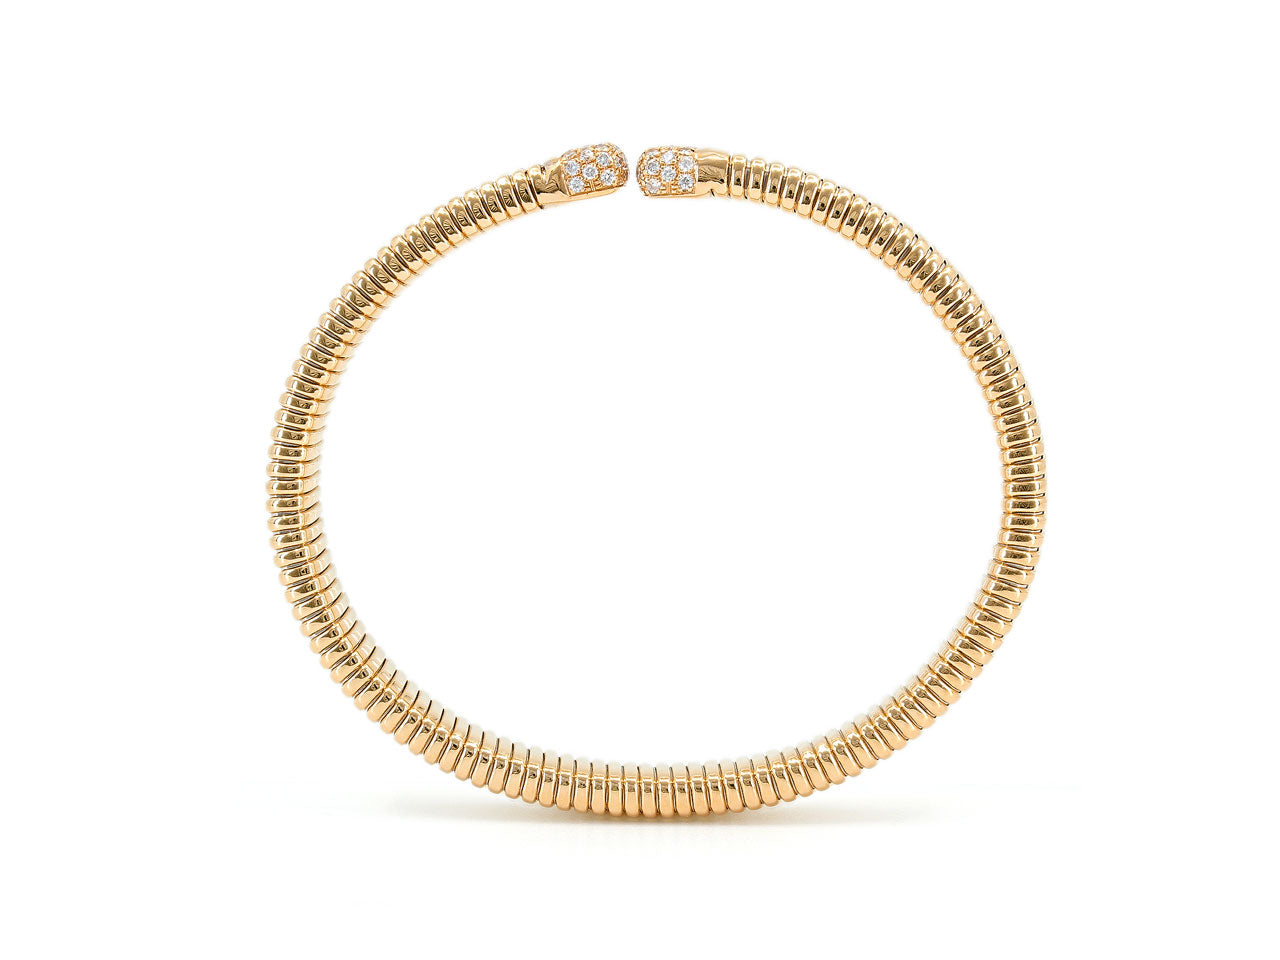 Tubogas Bracelet with Diamonds, Medium, by Beladora, in 18K Gold